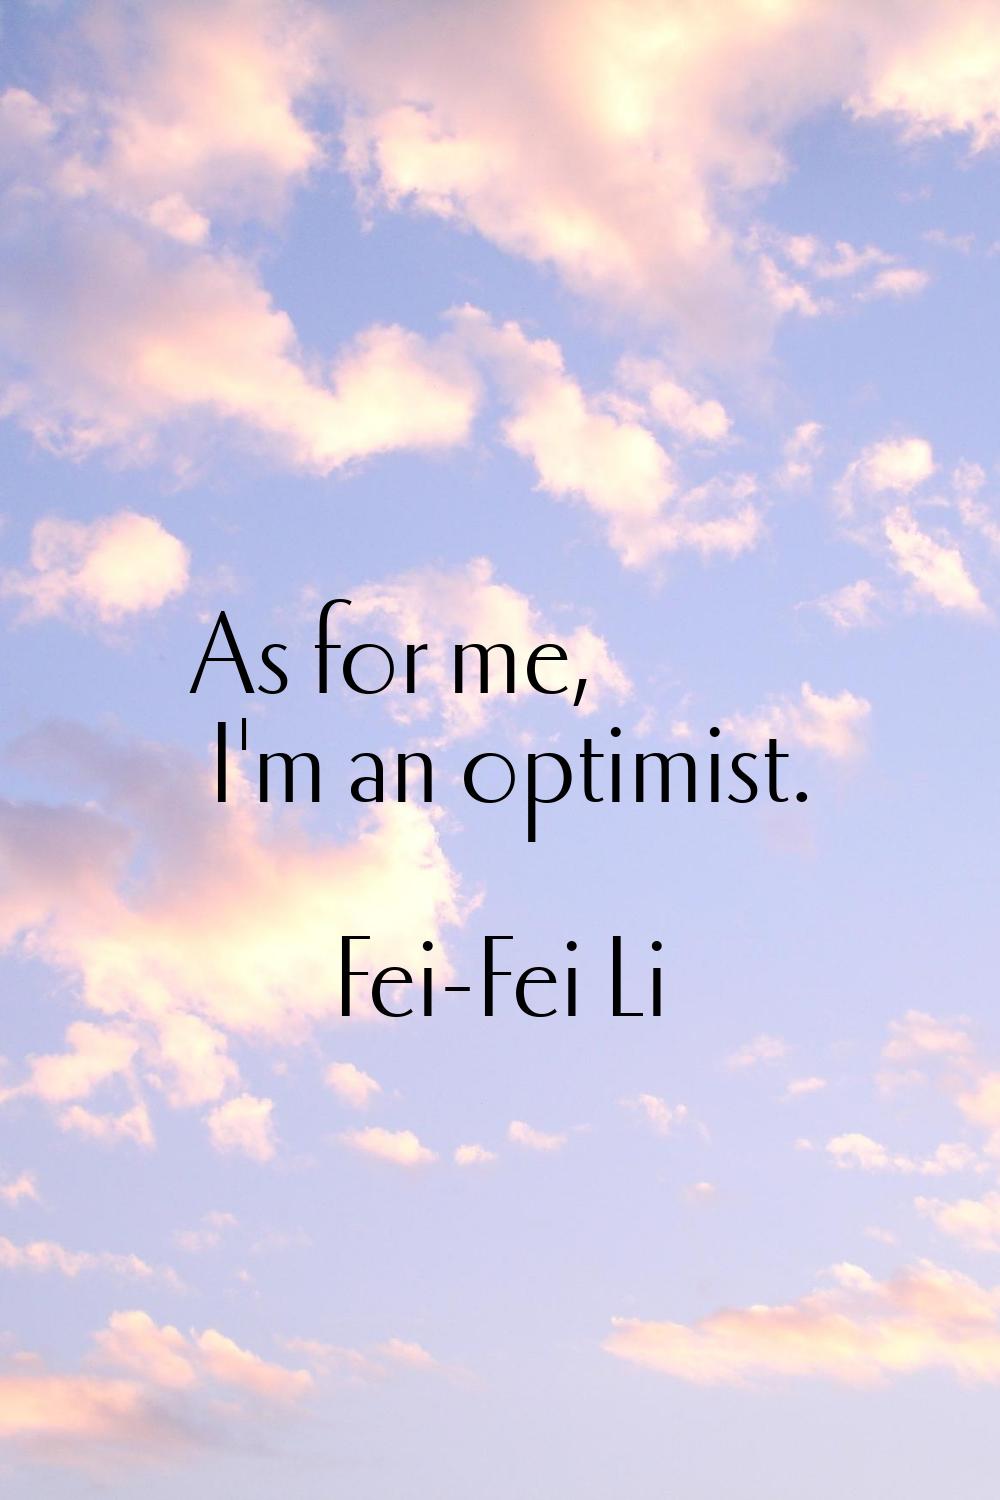 As for me, I'm an optimist.